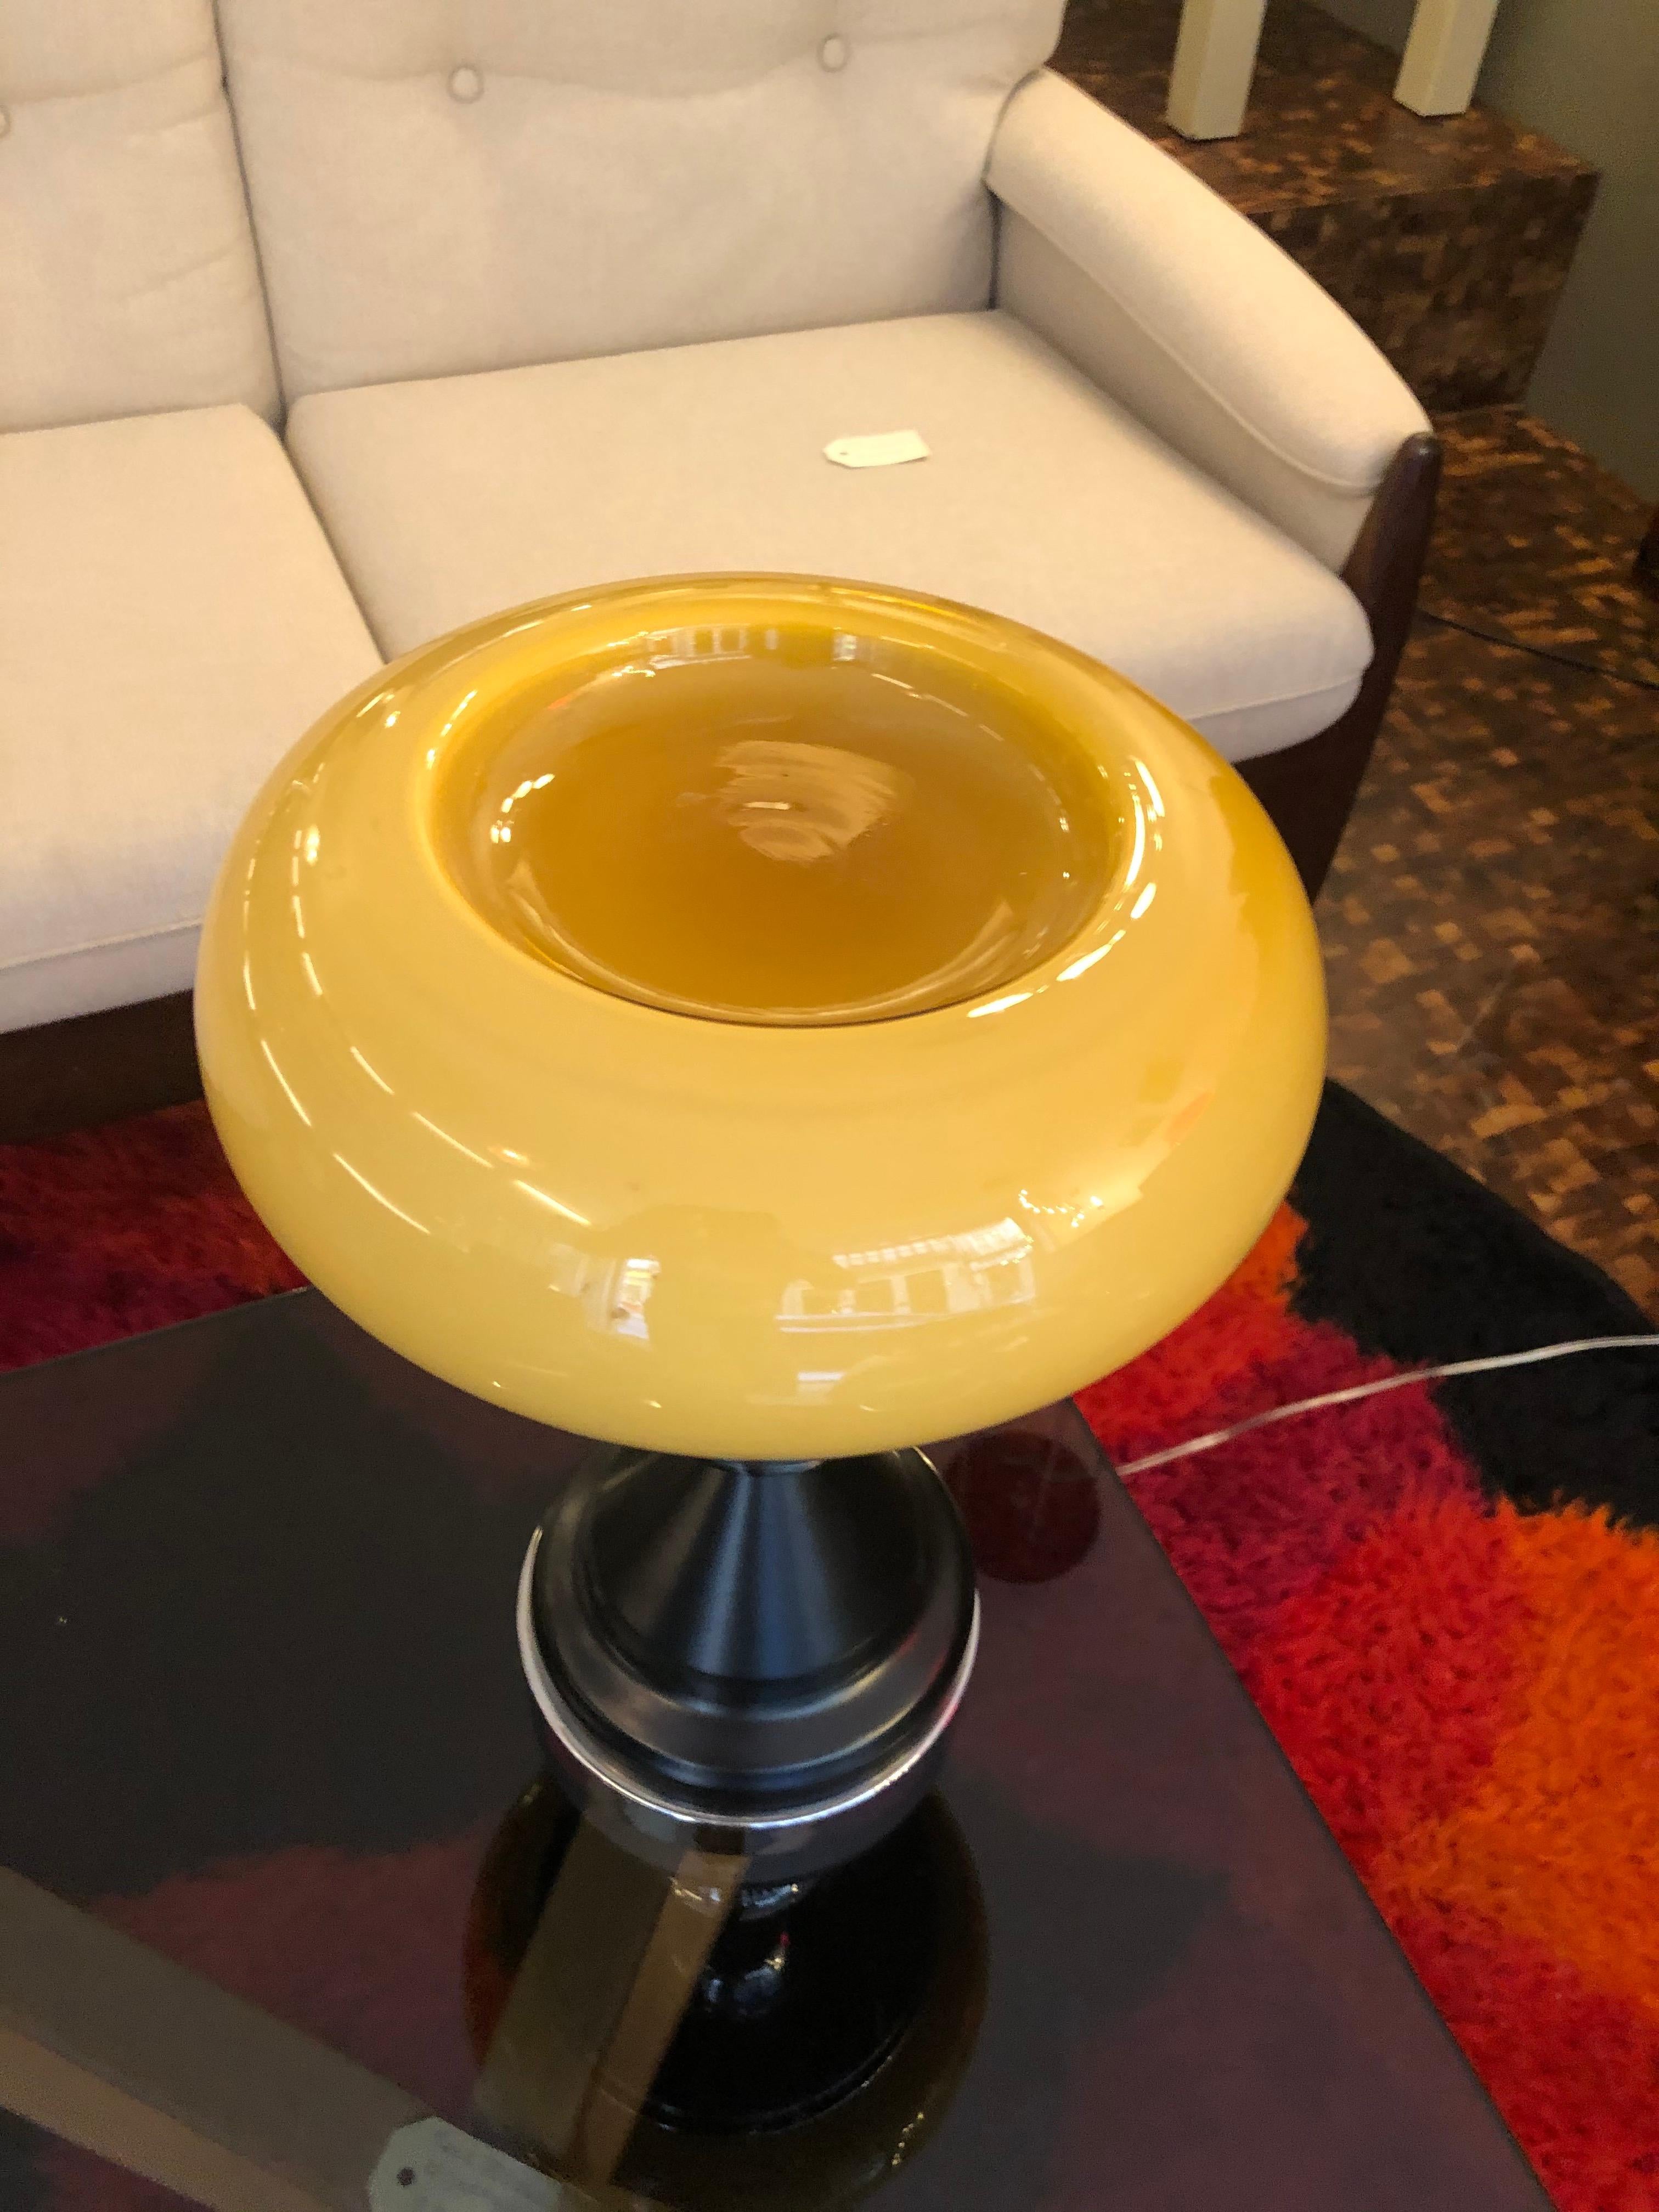 Italian Mid-Century Modern yellow opaline table lamp
Yellow opaline table lamp with chrome details white and black base.